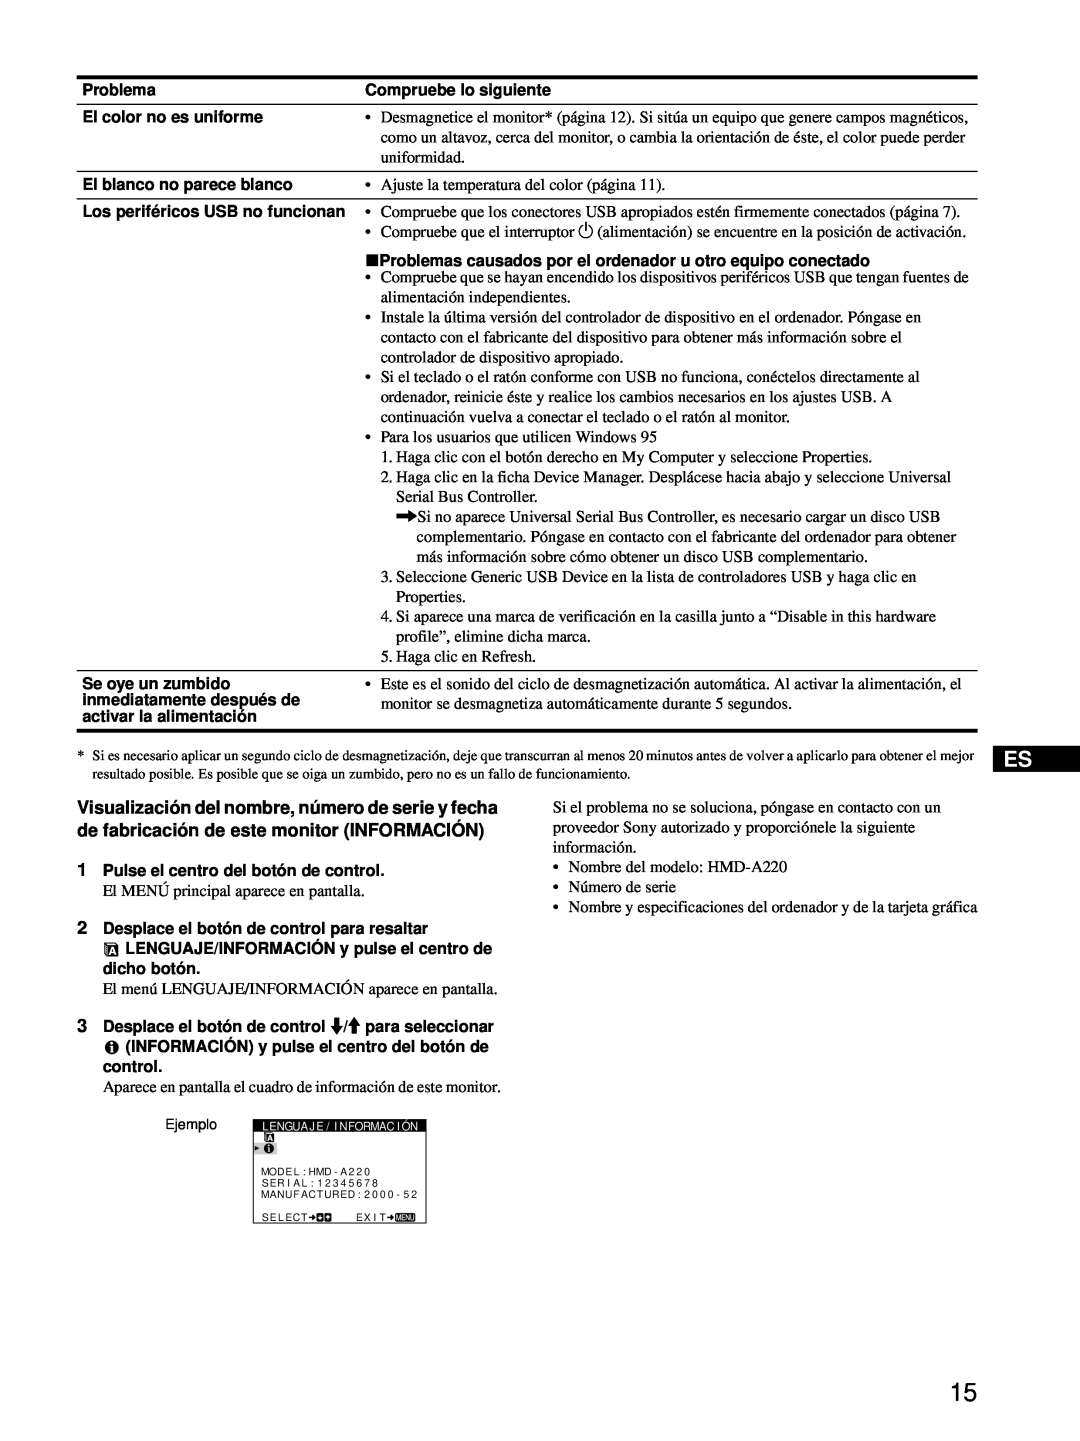 Sony HMD-A220 operating instructions Ejemplo, Lengua J E / I Nformac I Ón 